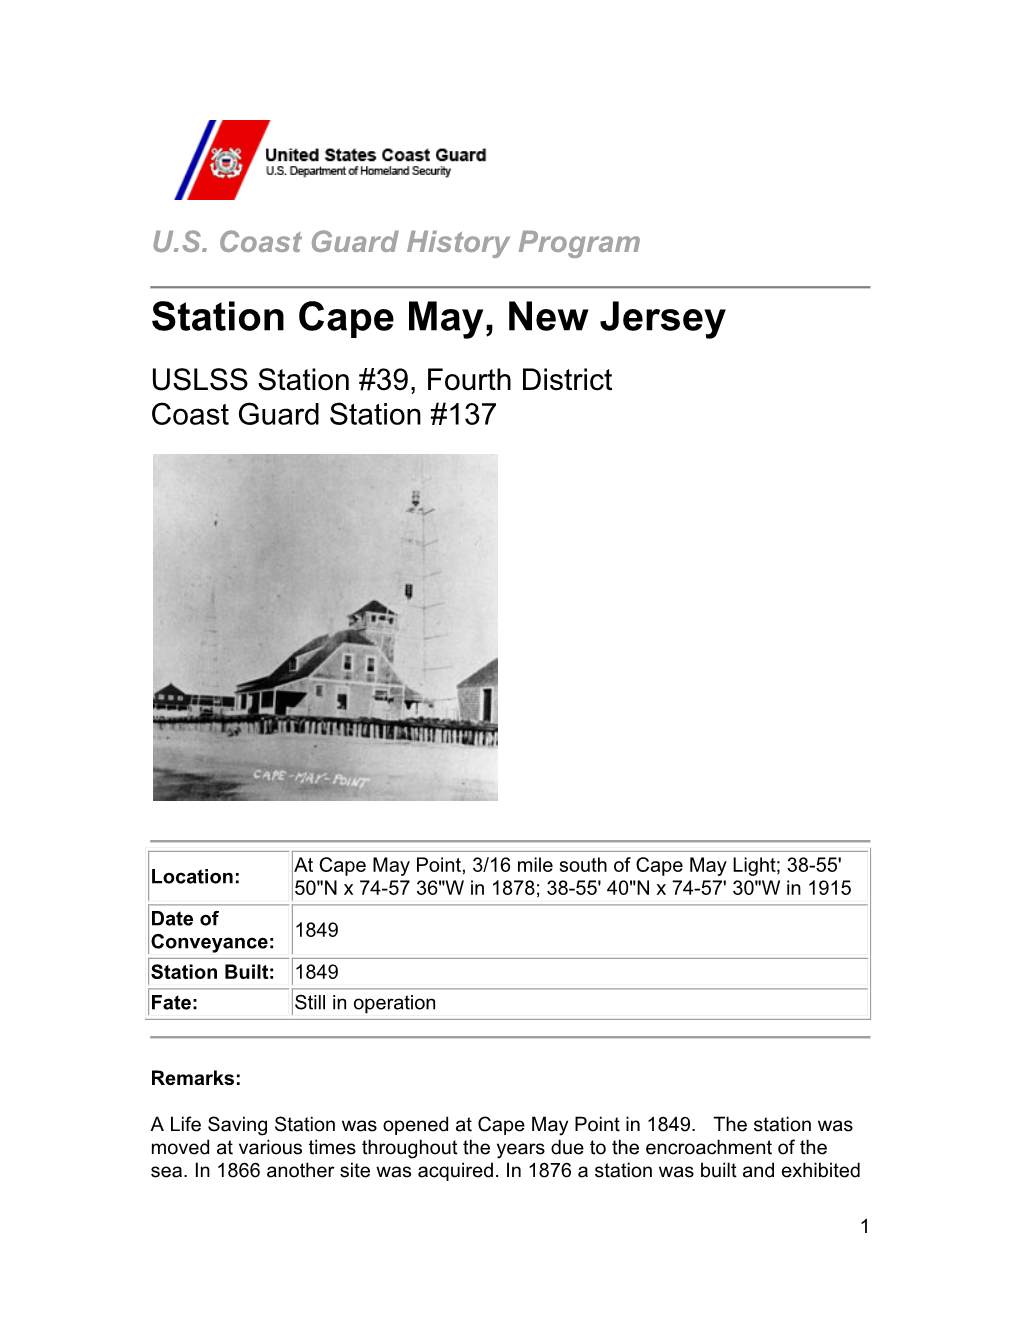 Station Cape May, New Jersey USLSS Station #39, Fourth District Coast Guard Station #137